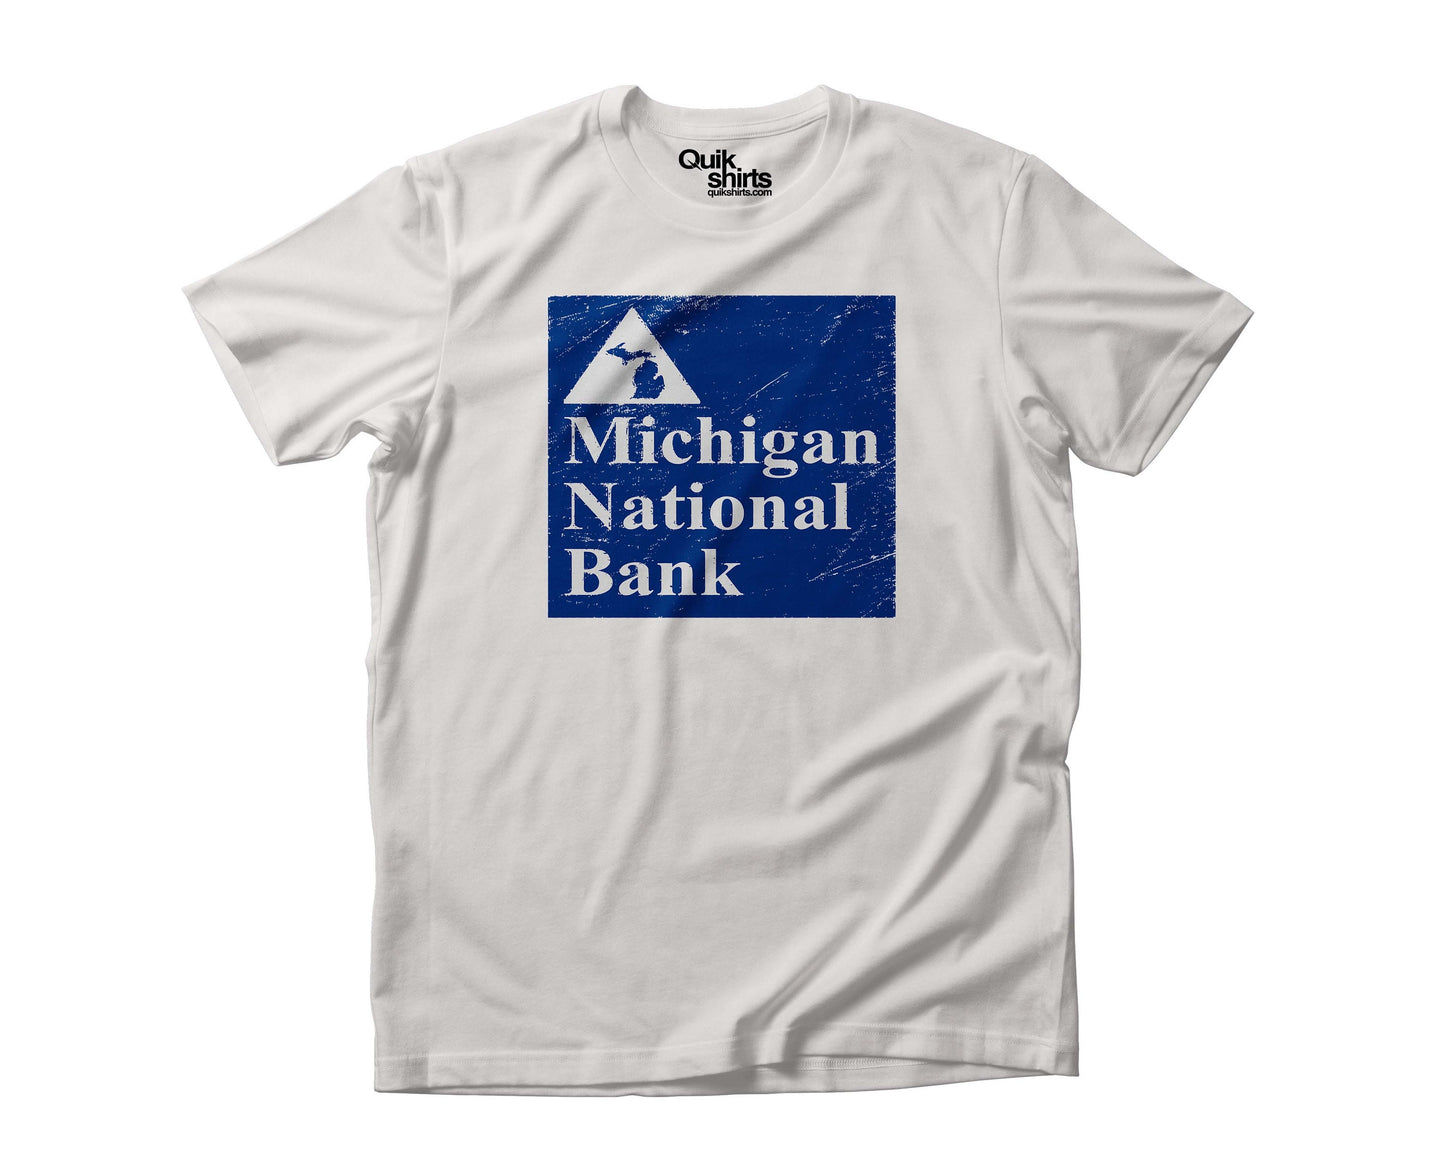 Michigan National Bank (Vintage Print)